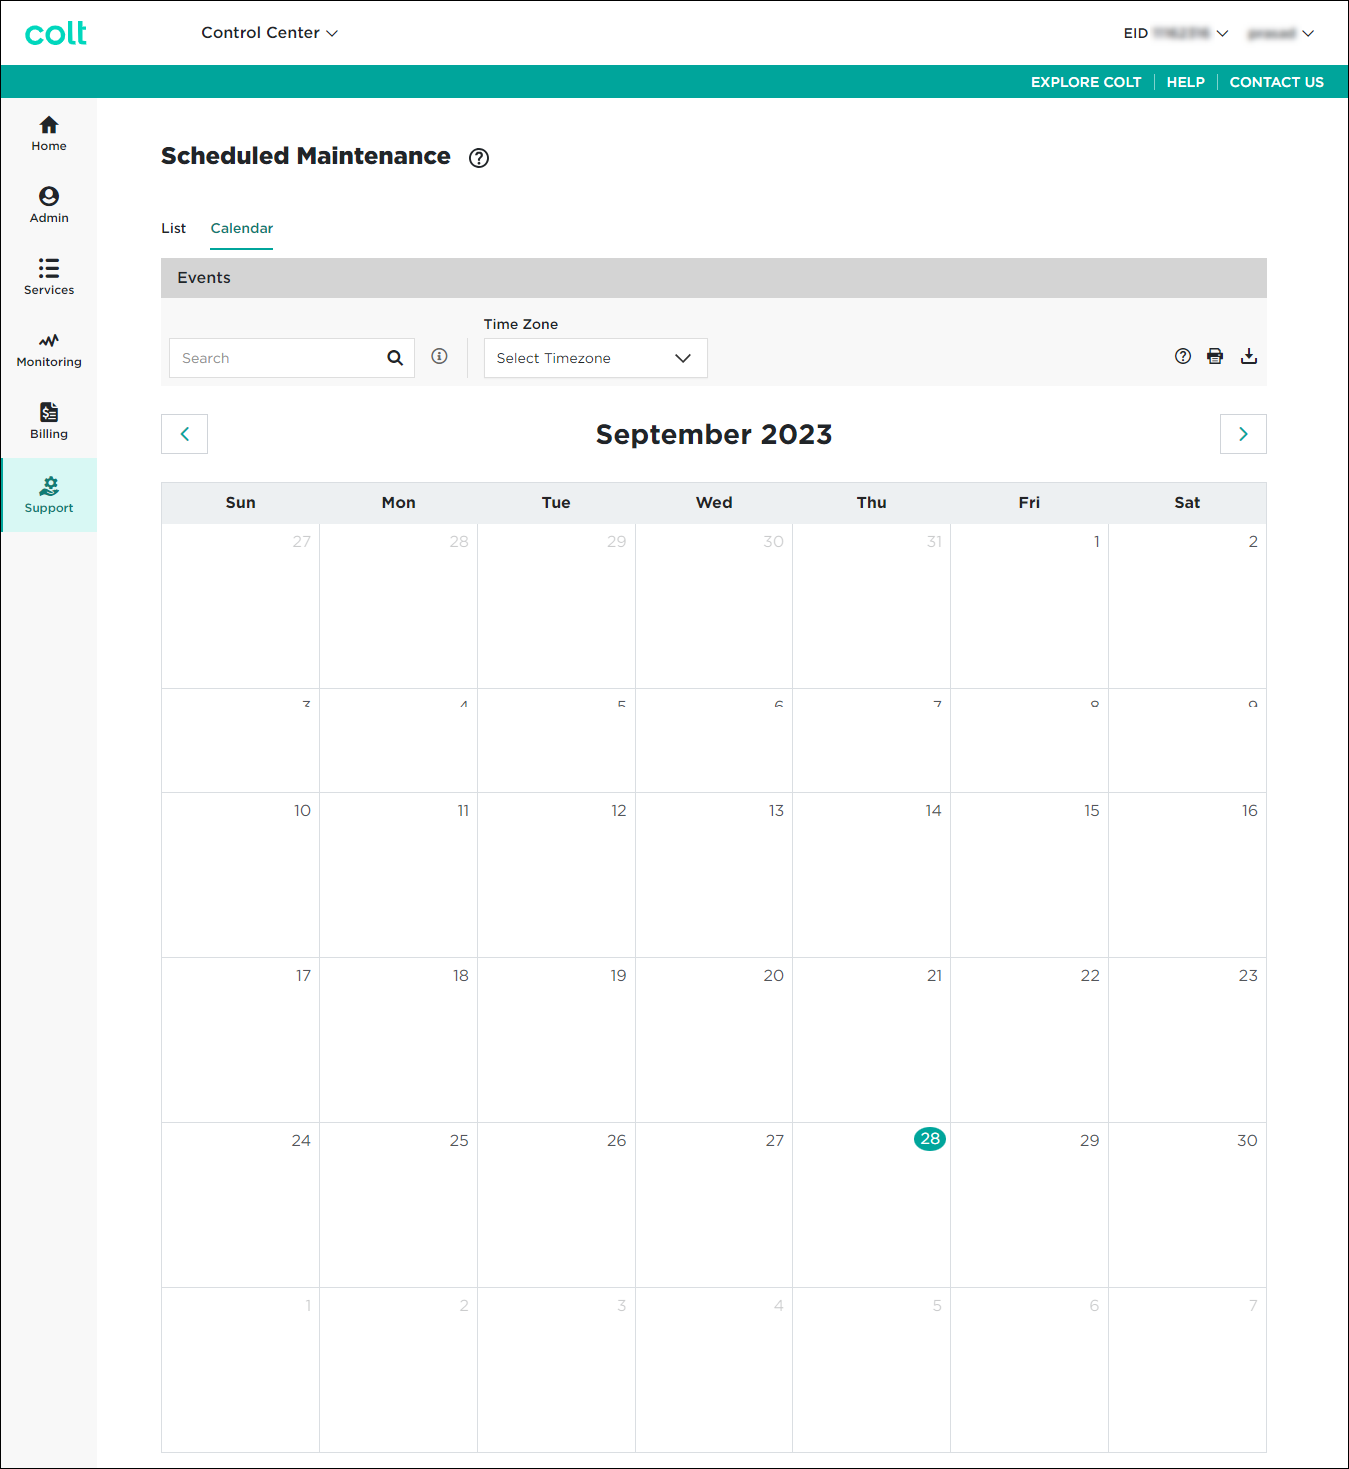 Scheduled Maintenance (showing calendar view)